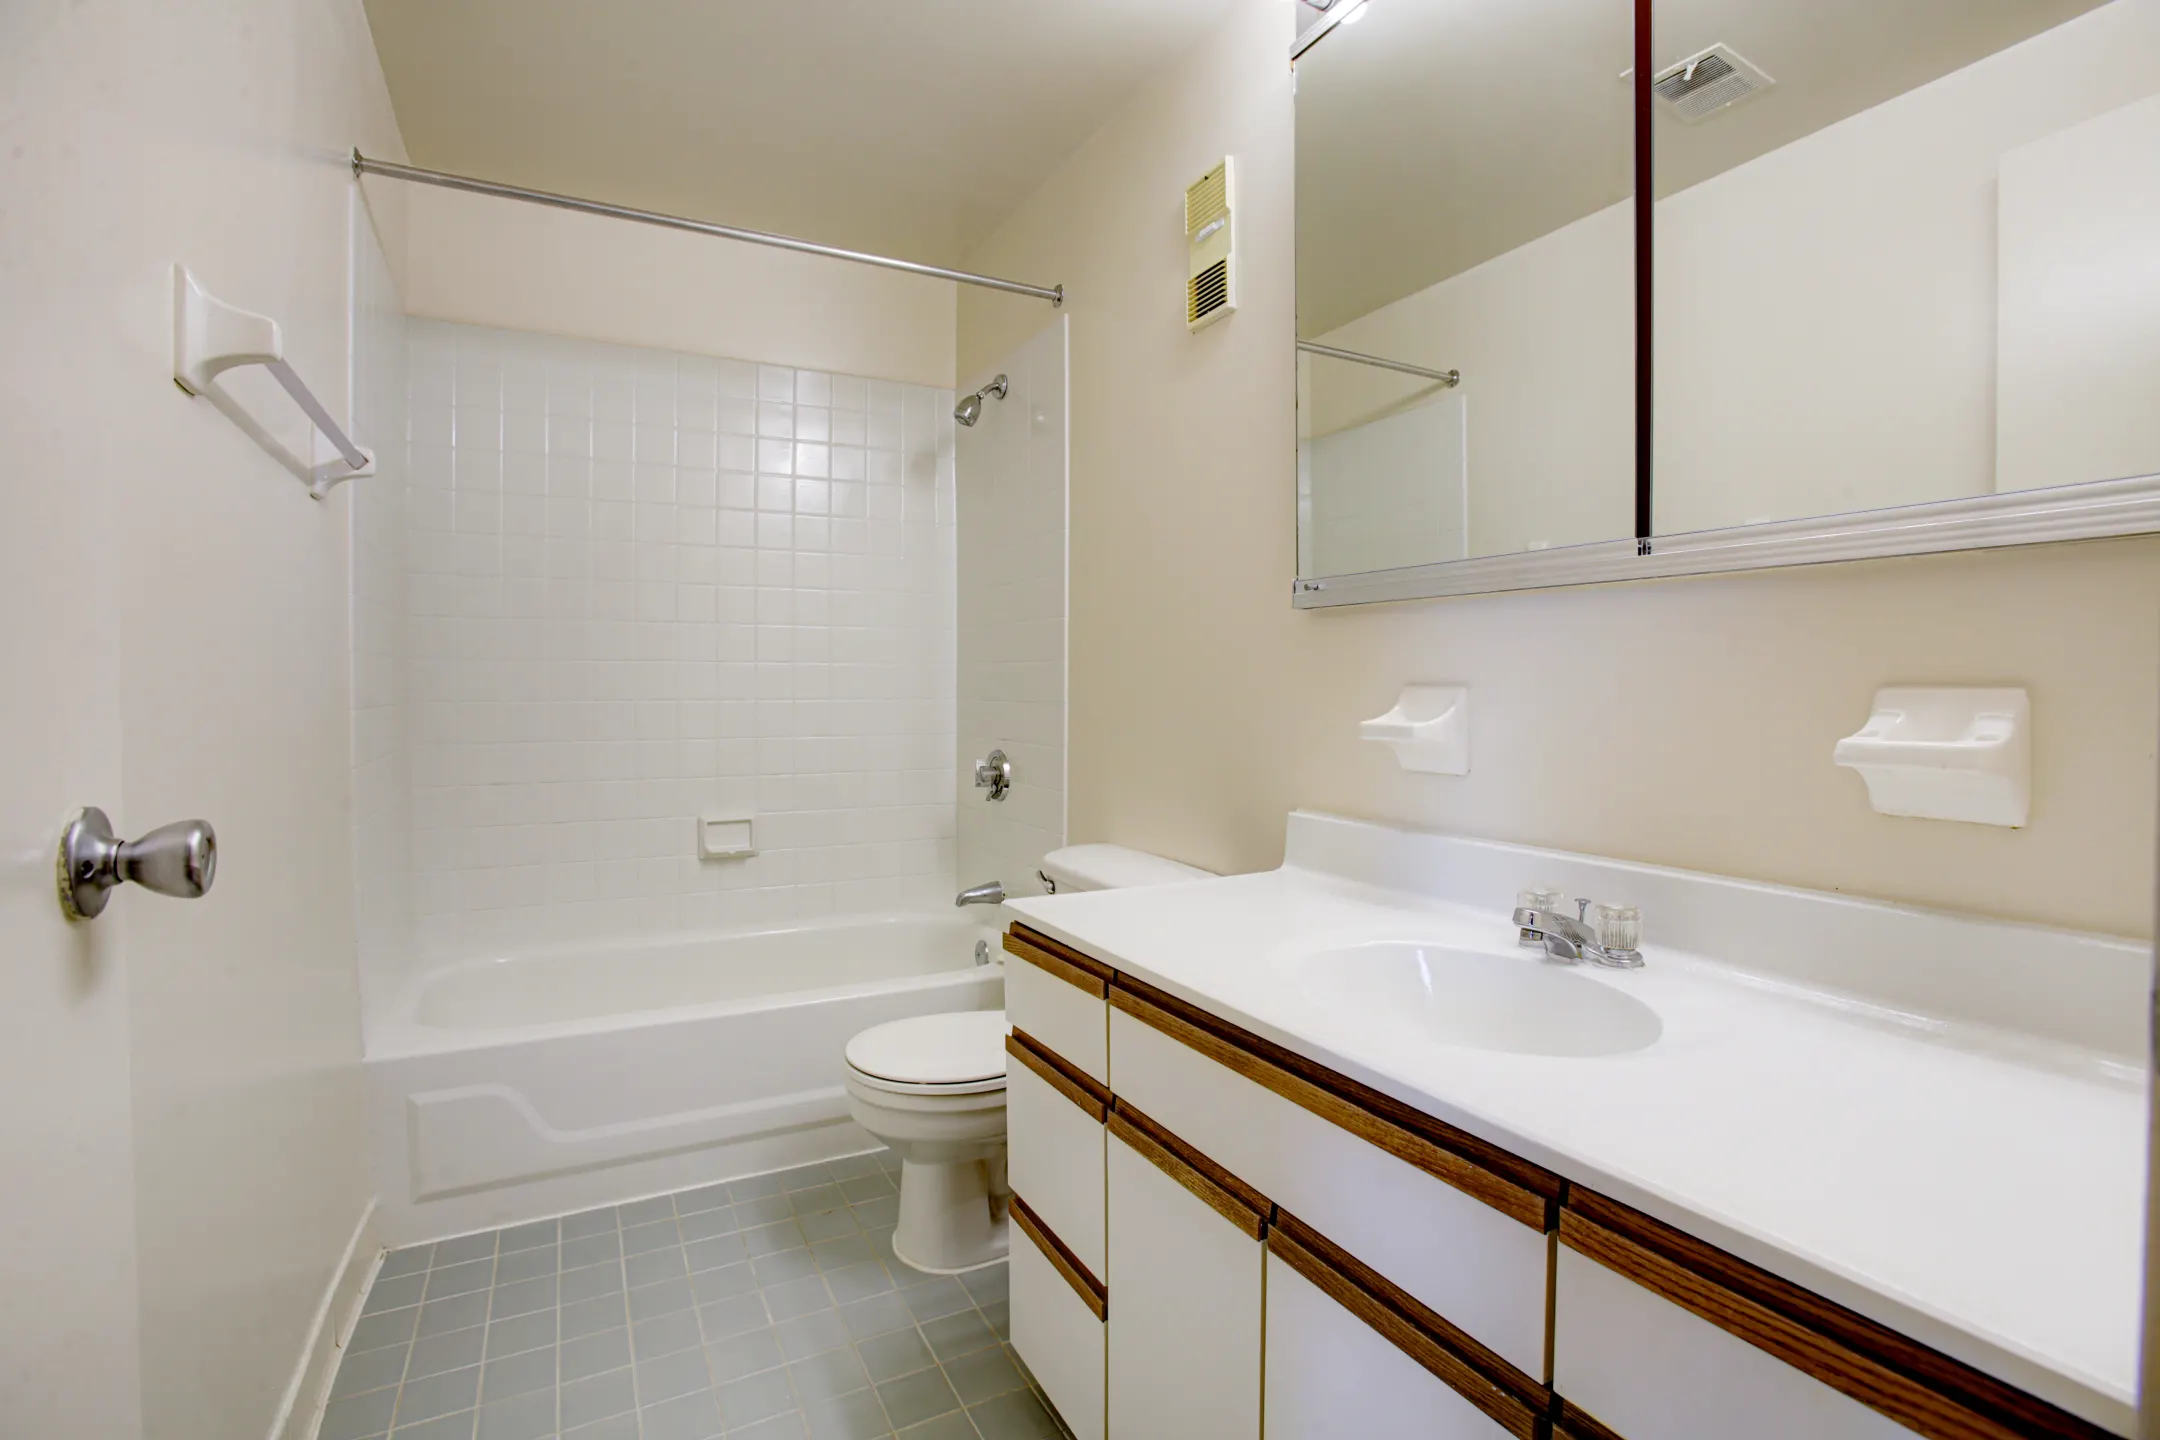 Bathroom - Marlboro Classic & Redwood Square - Baltimore, MD